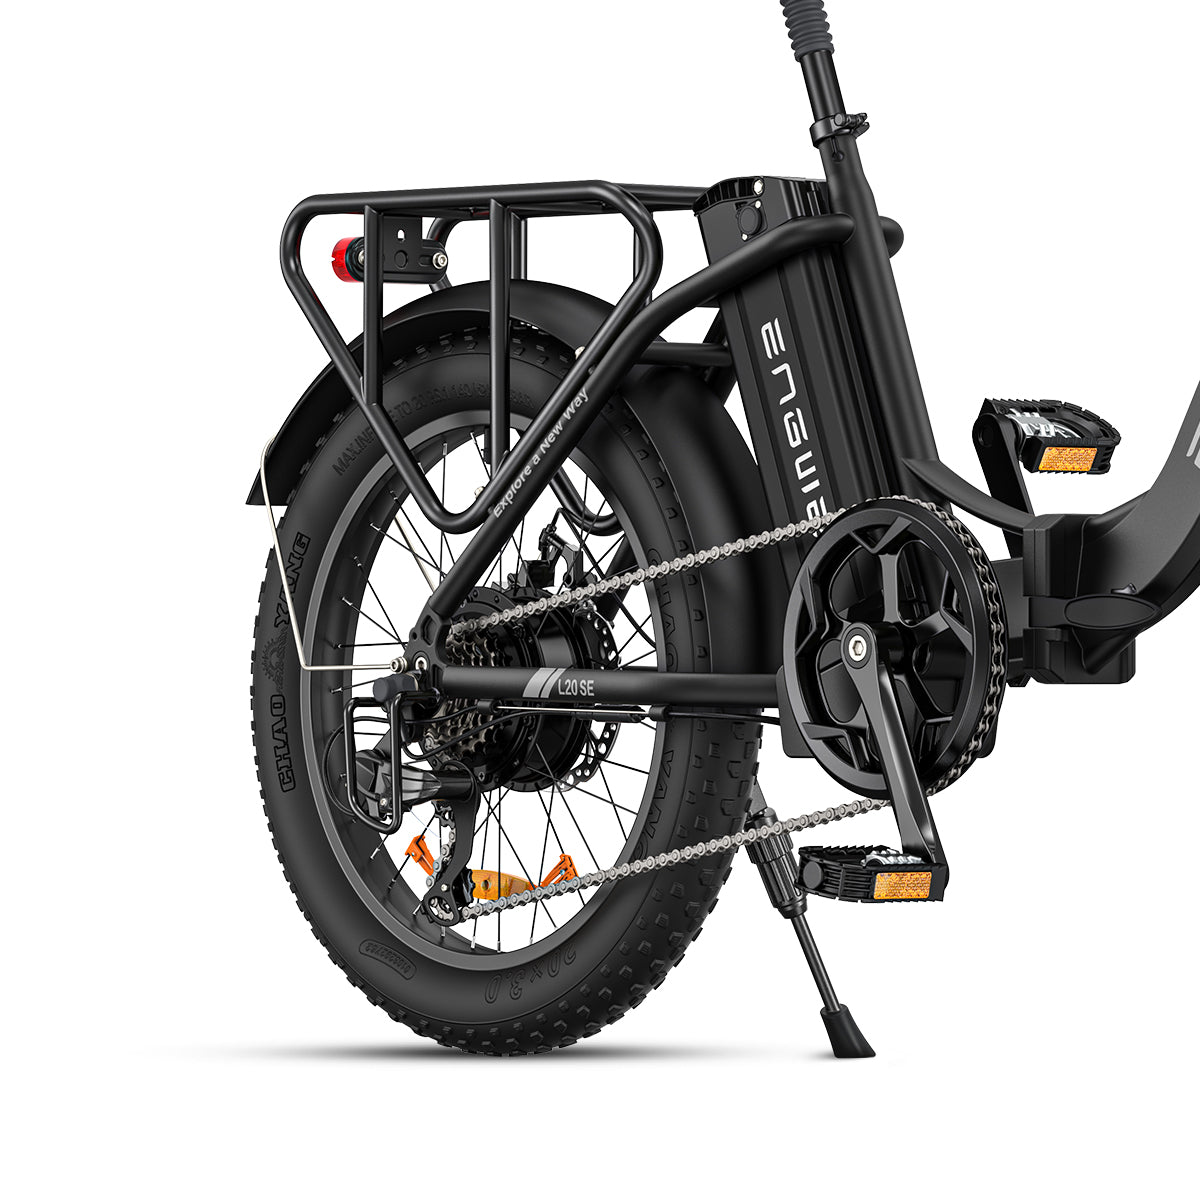 Engwe L20 SE 250W 20" Foldable Electric Trekking Bike 15.6Ah Step-through E-bike [Pre-Order]